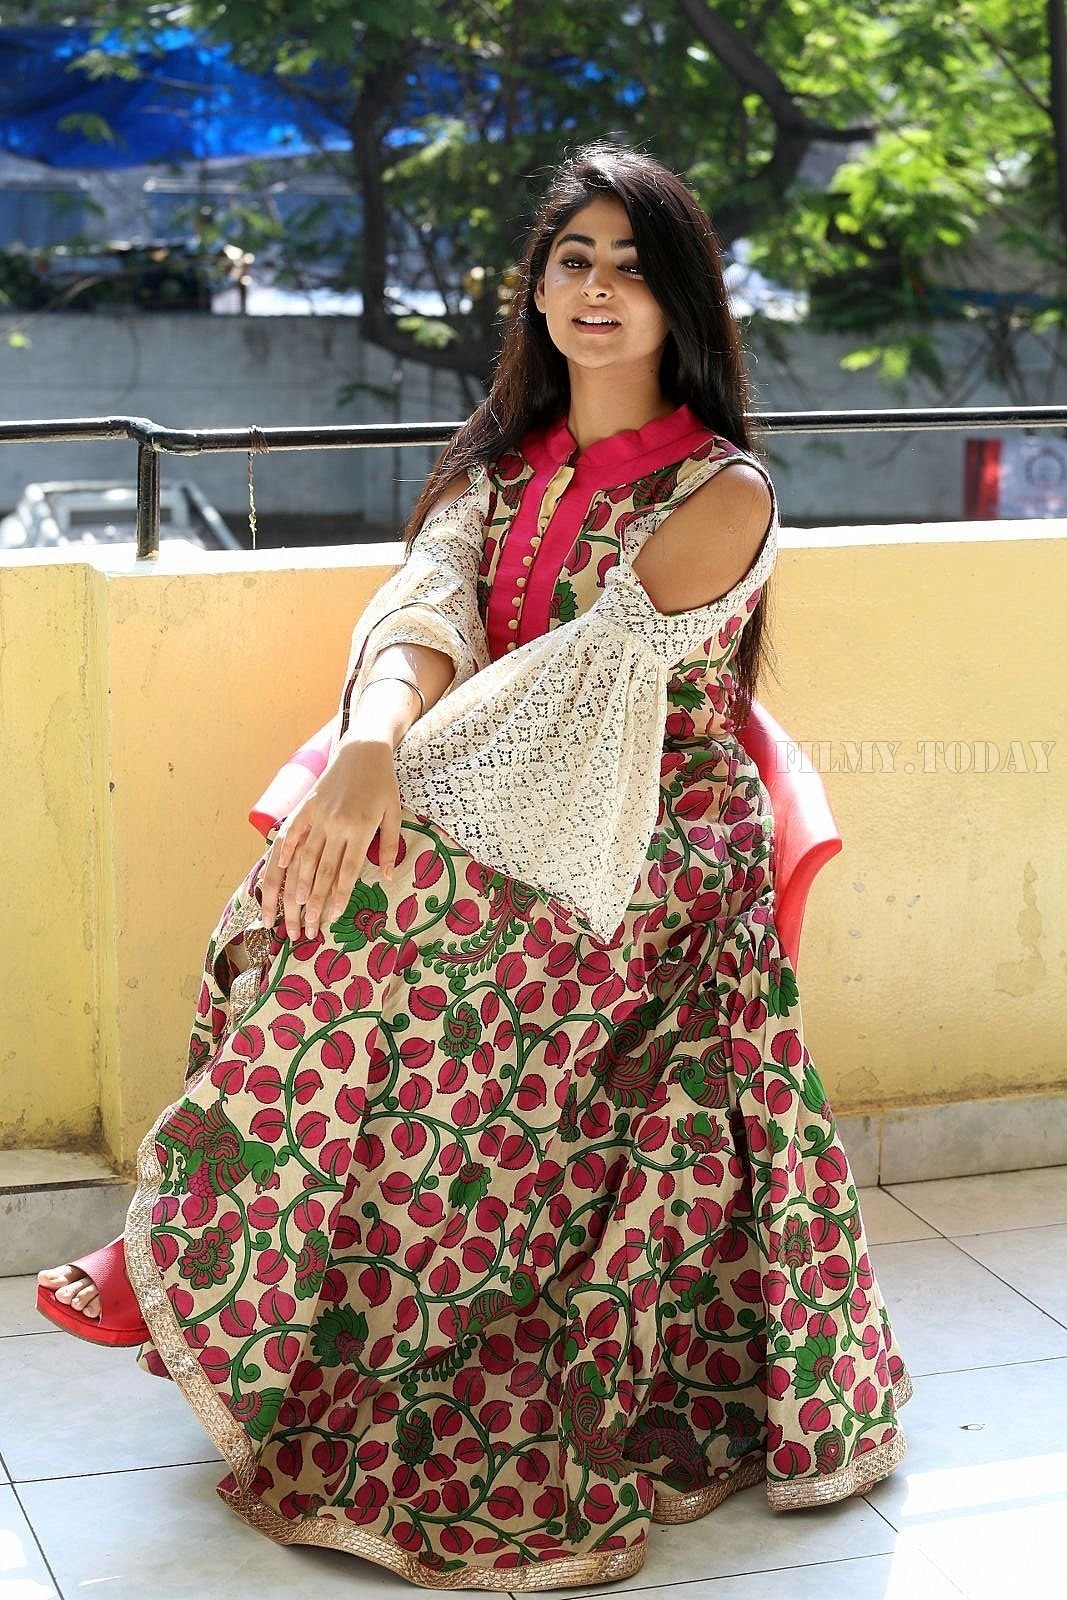 Actress Palak Lalwani Interview About Juvva Telugu Movie Photos | Picture 1567314